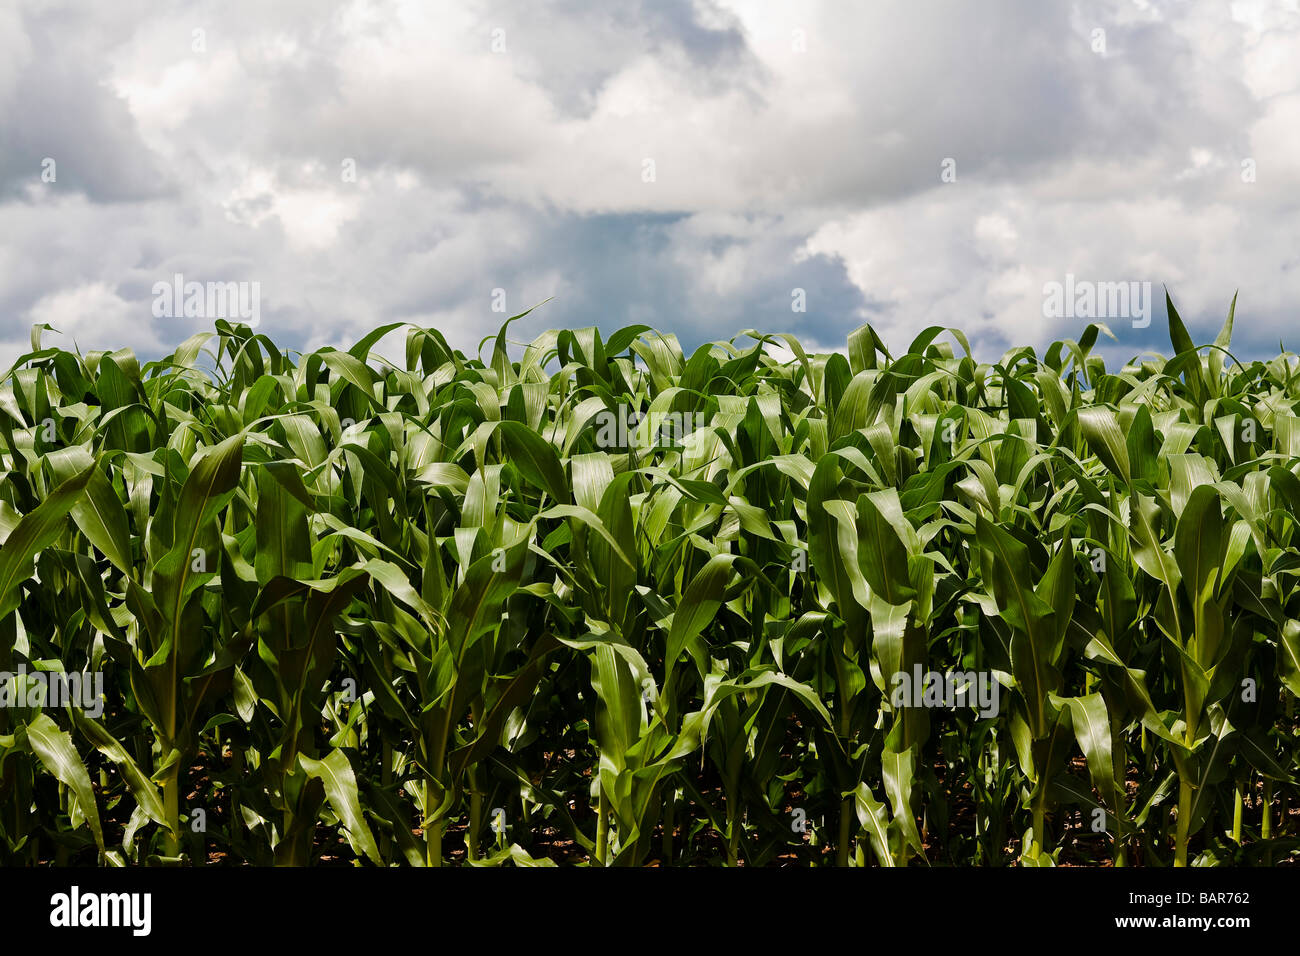 Agriculture corn plantation BR 163 road at Mato Grosso State Brazil Stock Photo